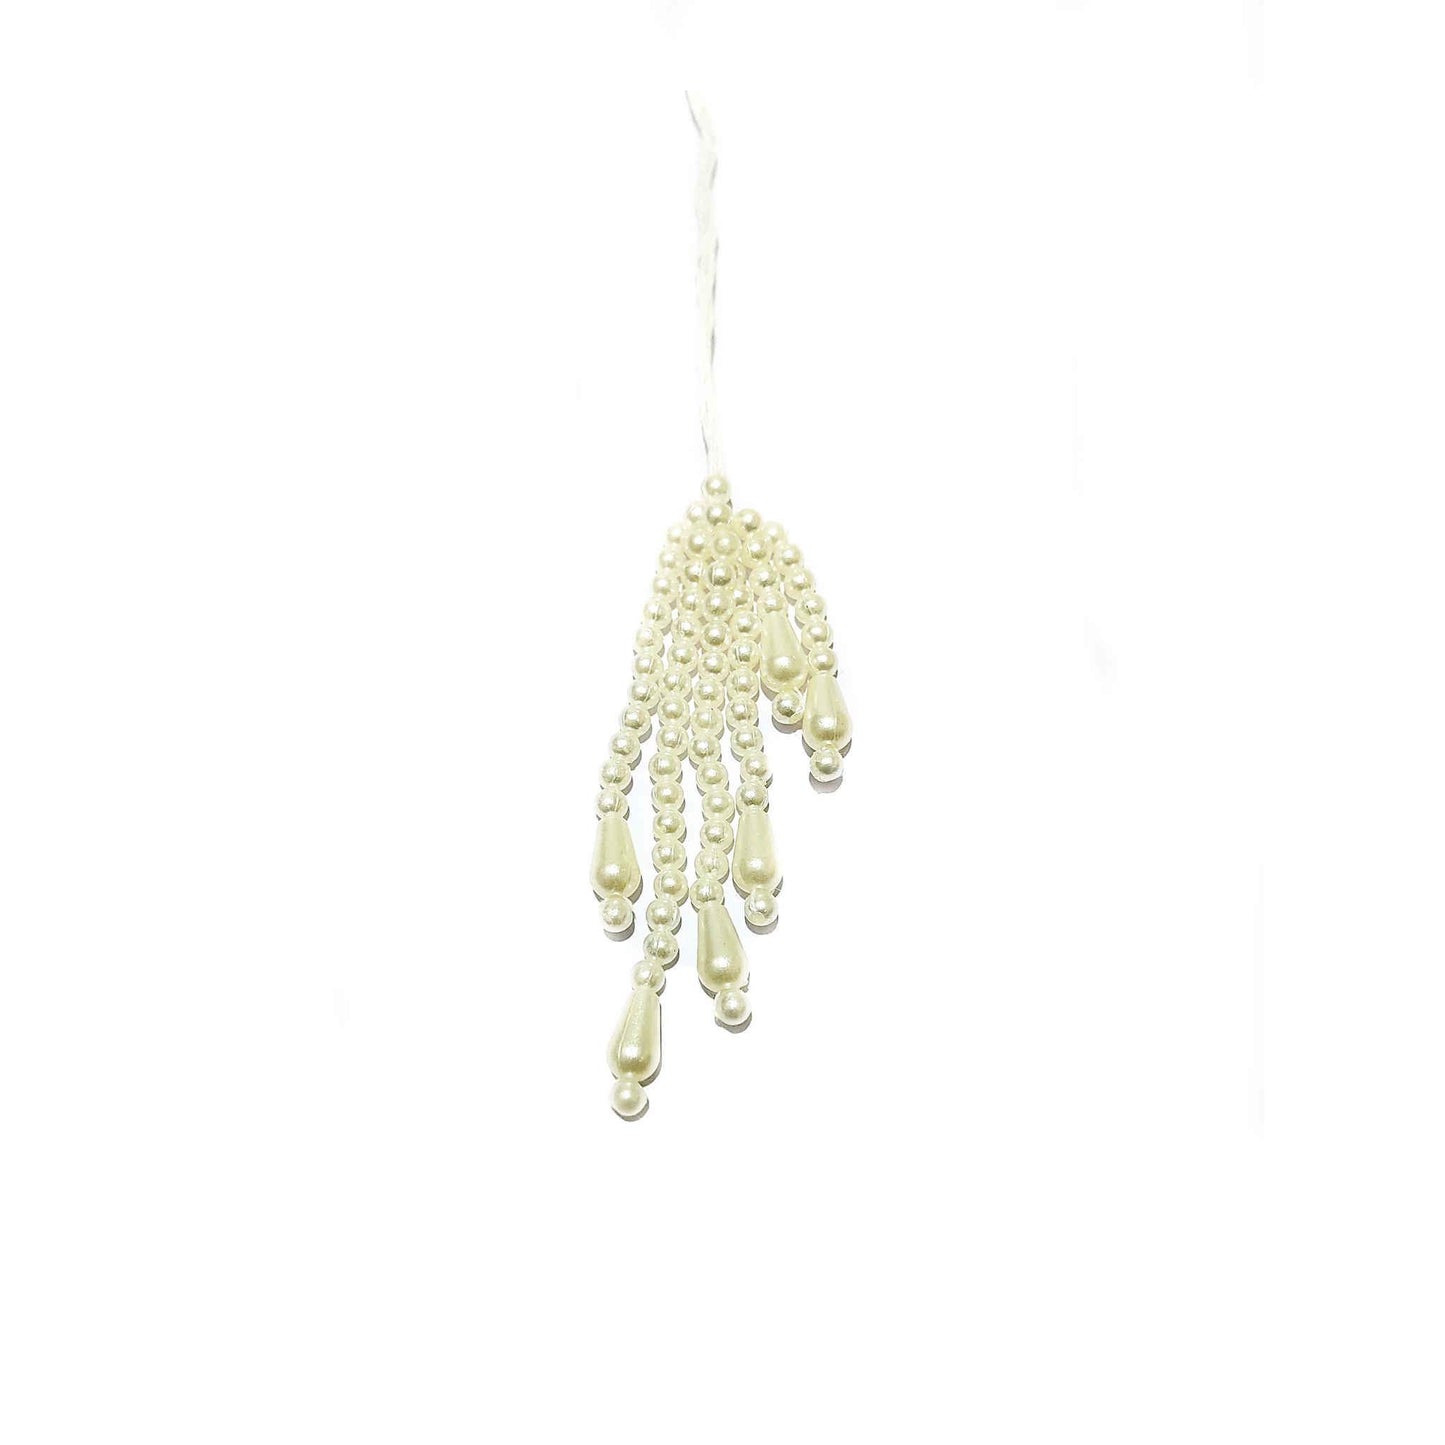 Indian Petals Pearl Beads Handmade DIY Craft, Jewelry Fringe Tassel with Bud Pearls - Design 824